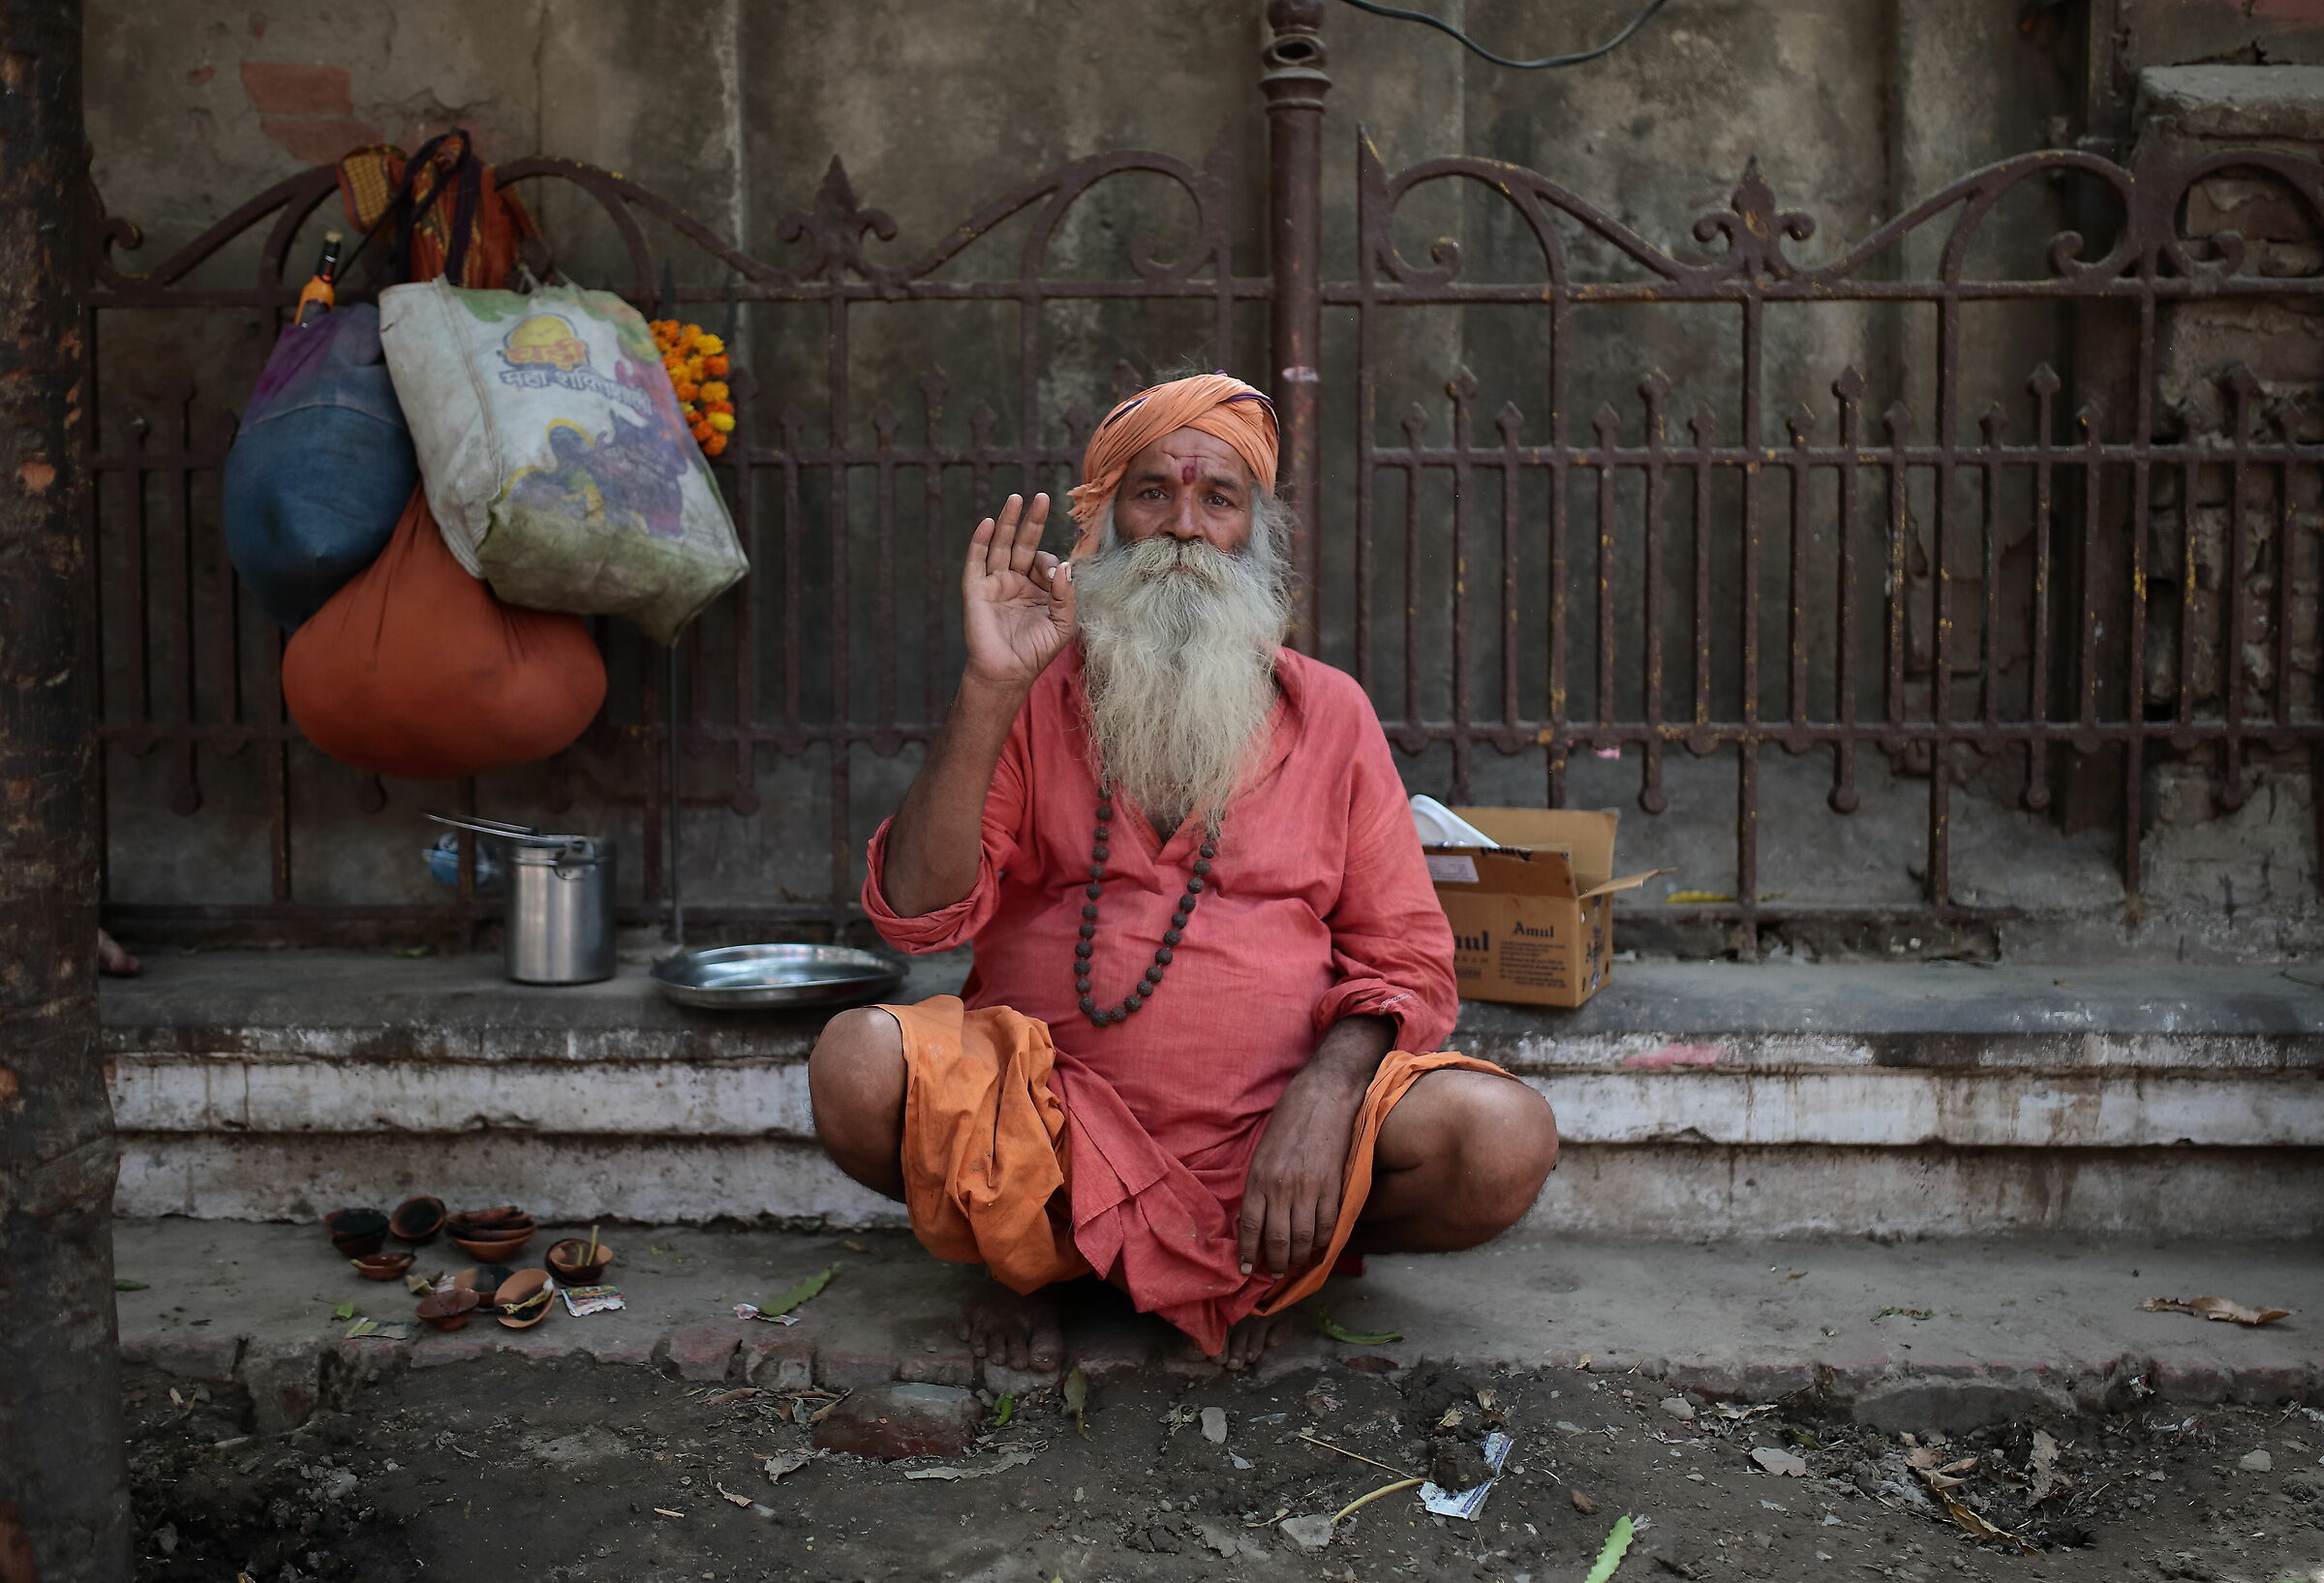 Scenes of everyday life in Varanasi...